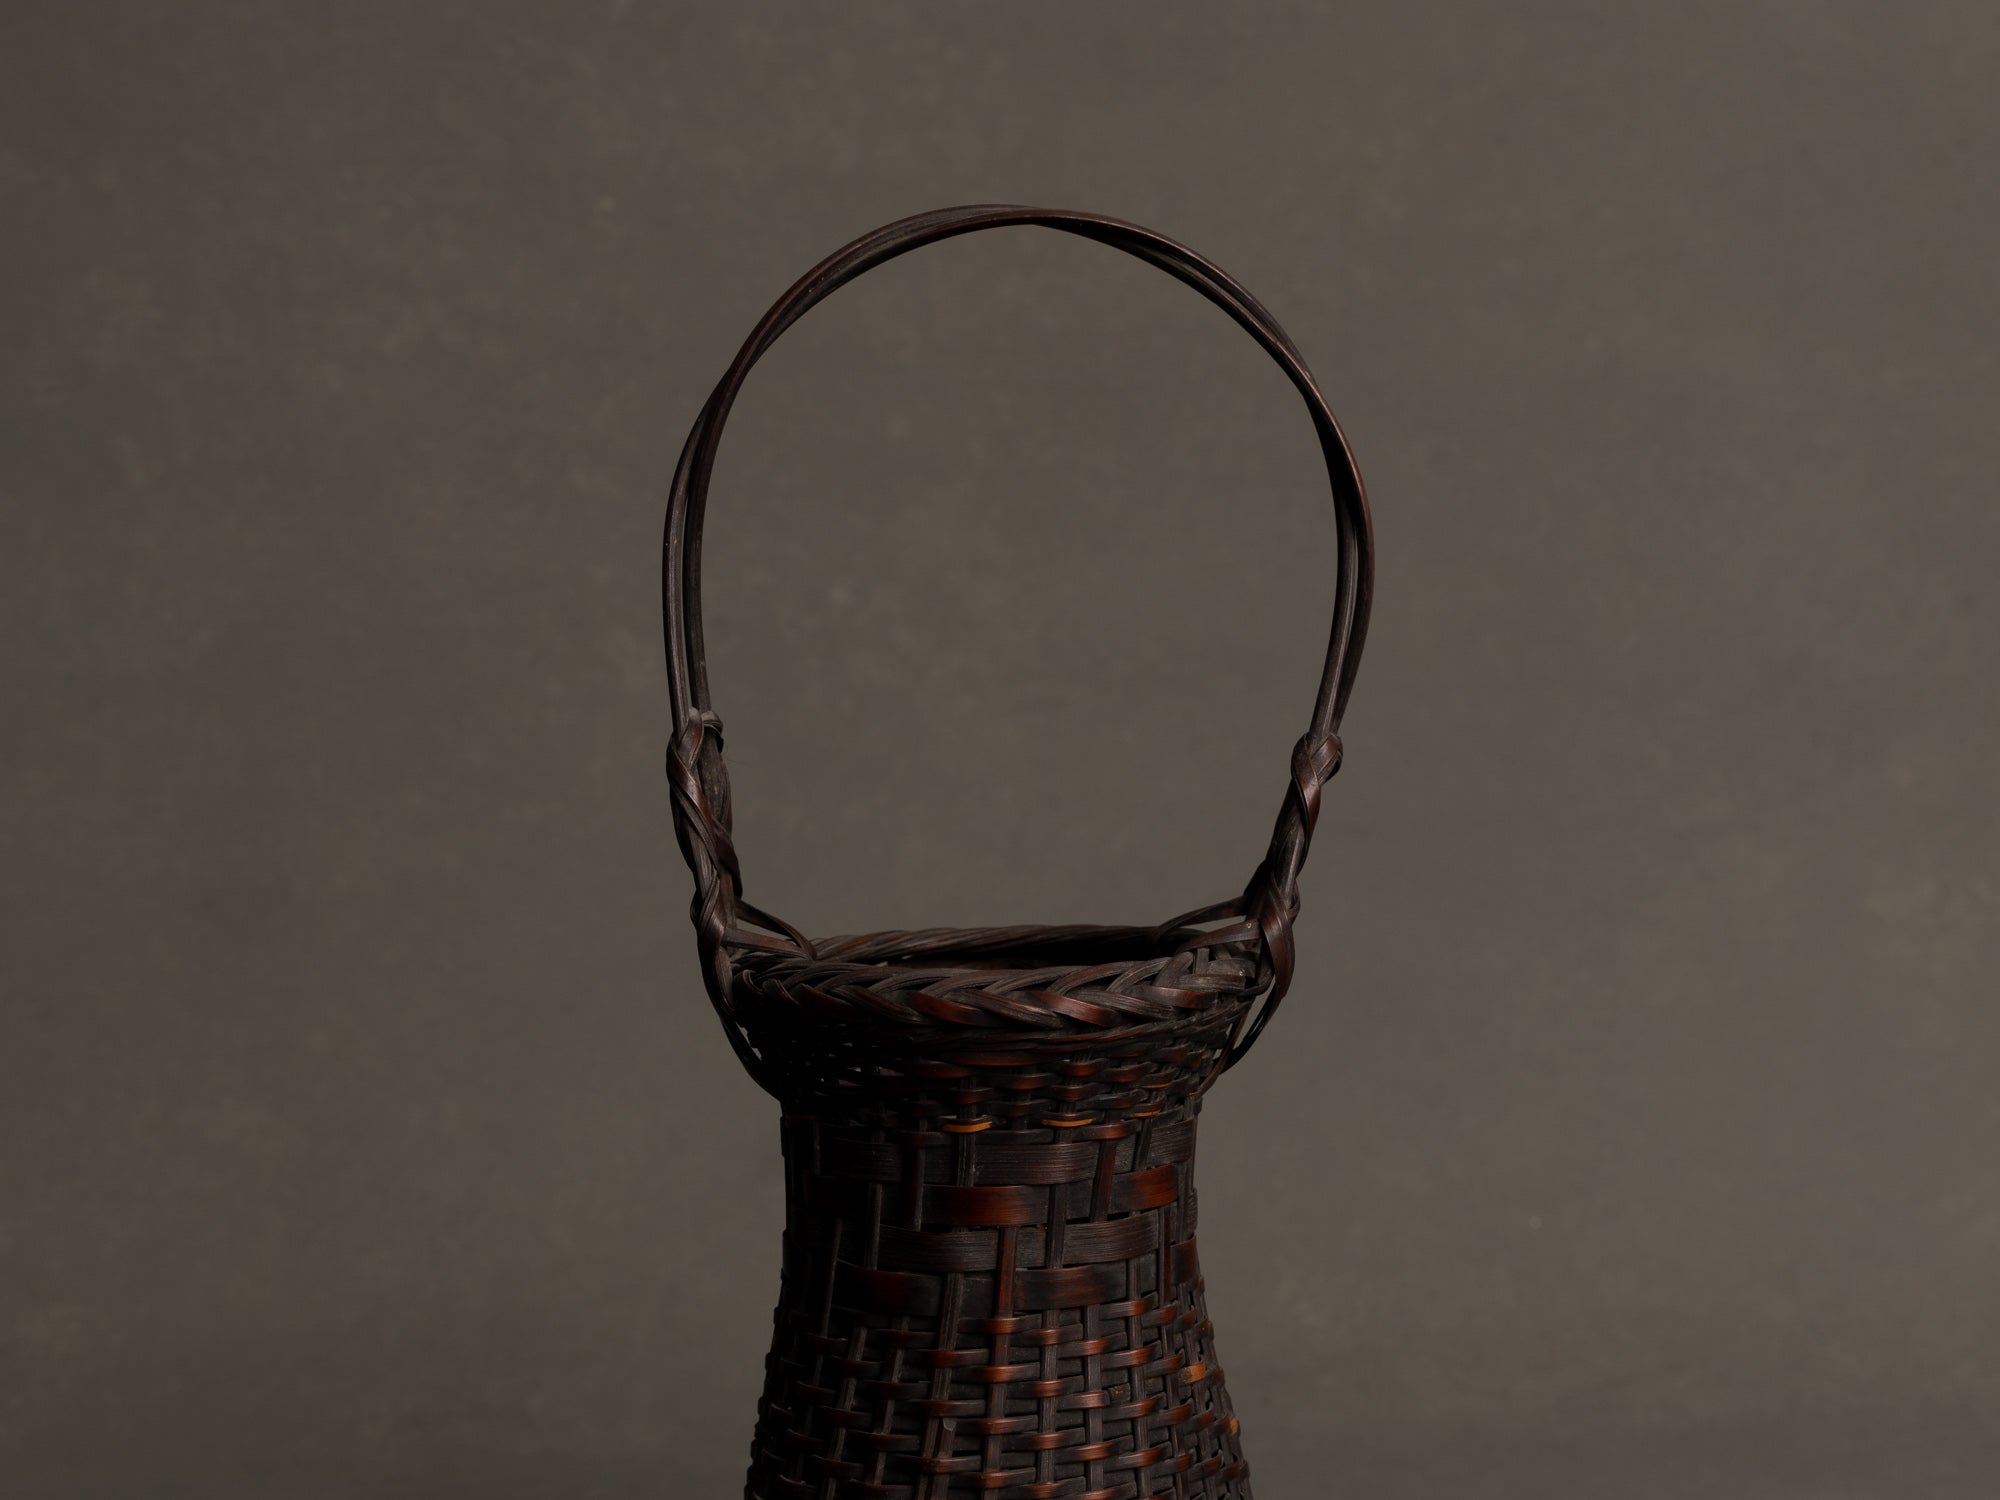 Petit panier hanakago, vase cornet à anse en bambou pour l'ikebana, Japon (Ère Shōwa)..Hanakago, bamboo diabolo shaped handled vase for ikebana, Japan (Shōwa era)